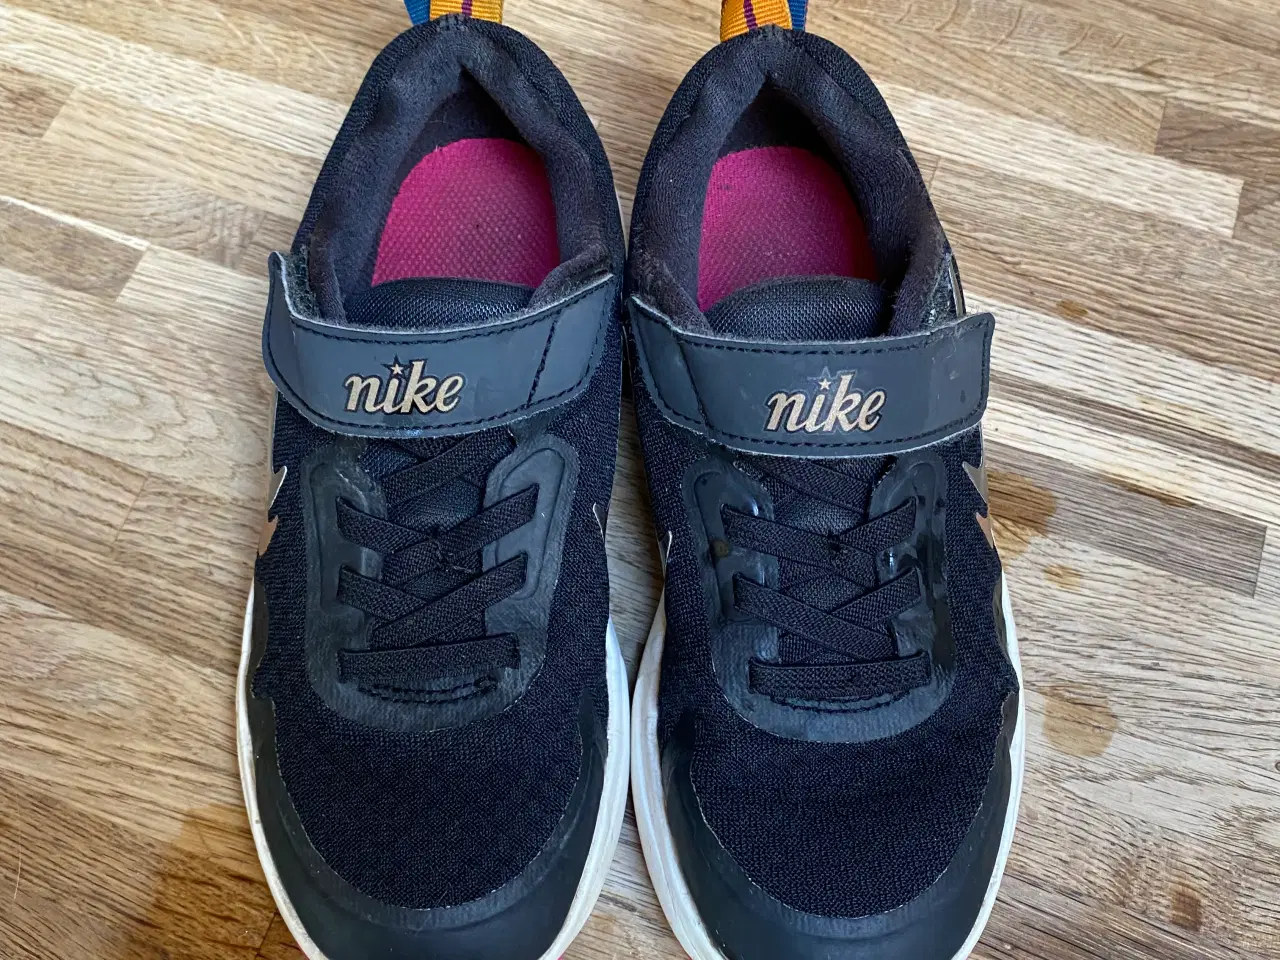 Billede 1 - Nike kondisko str 30 sandaler 30 